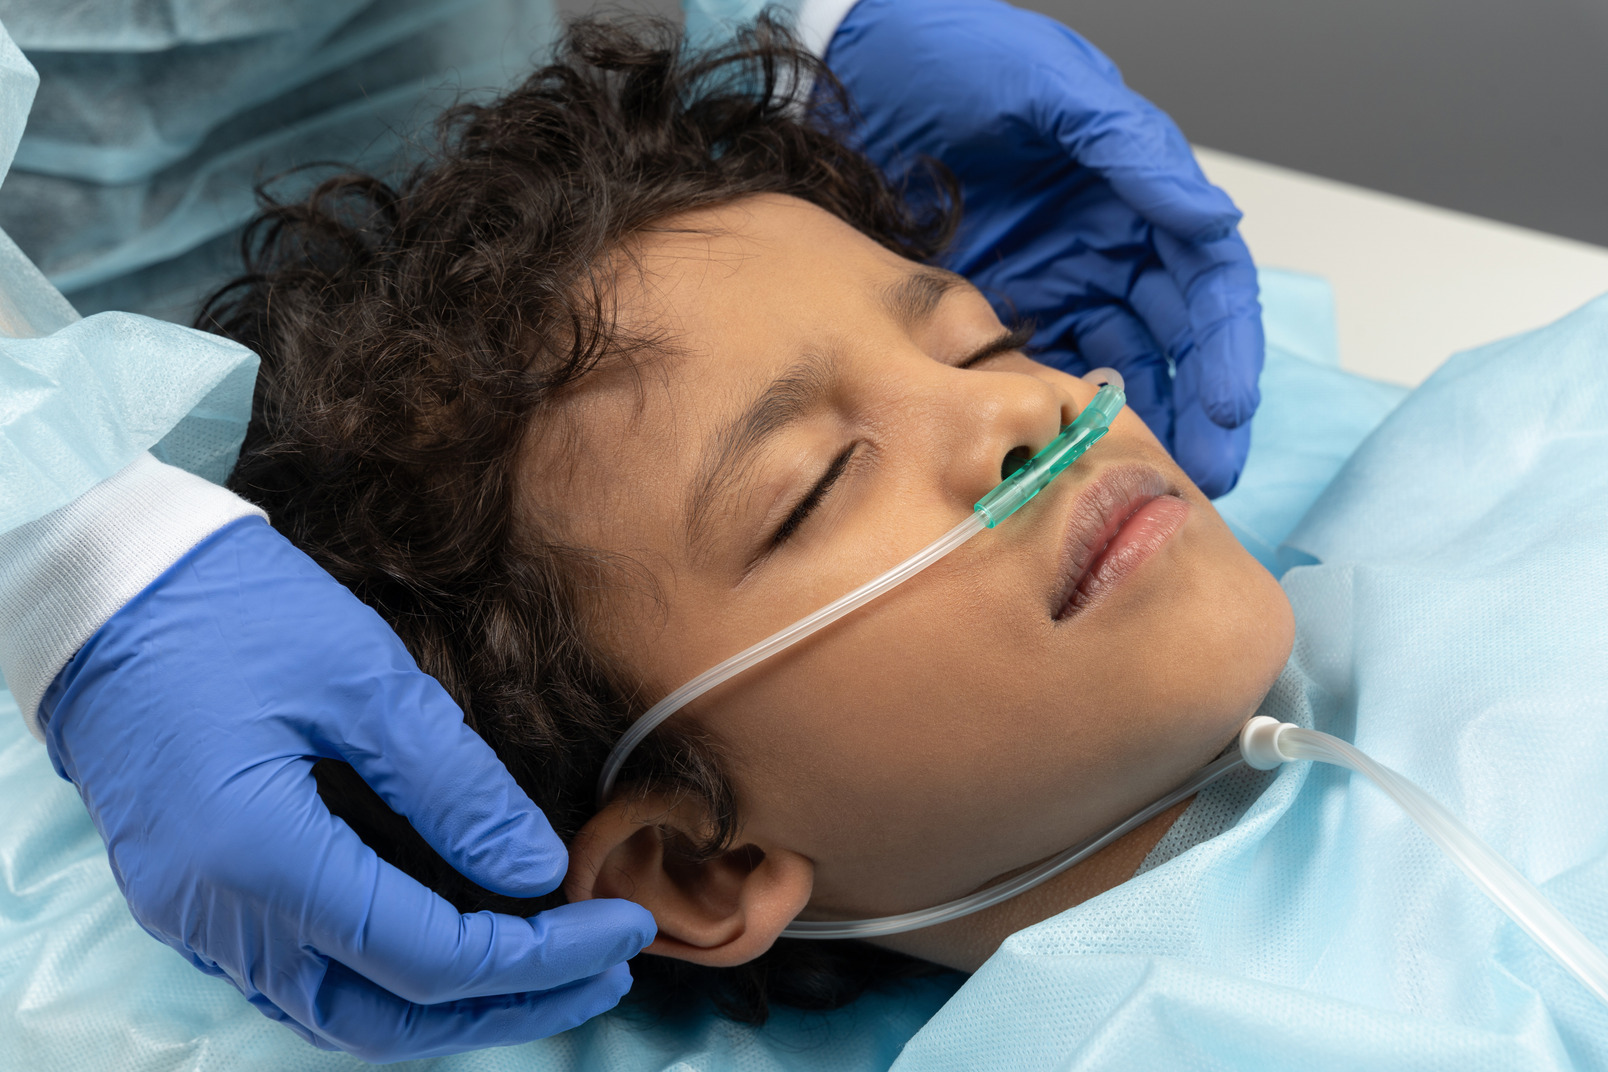 Child under anesthesia